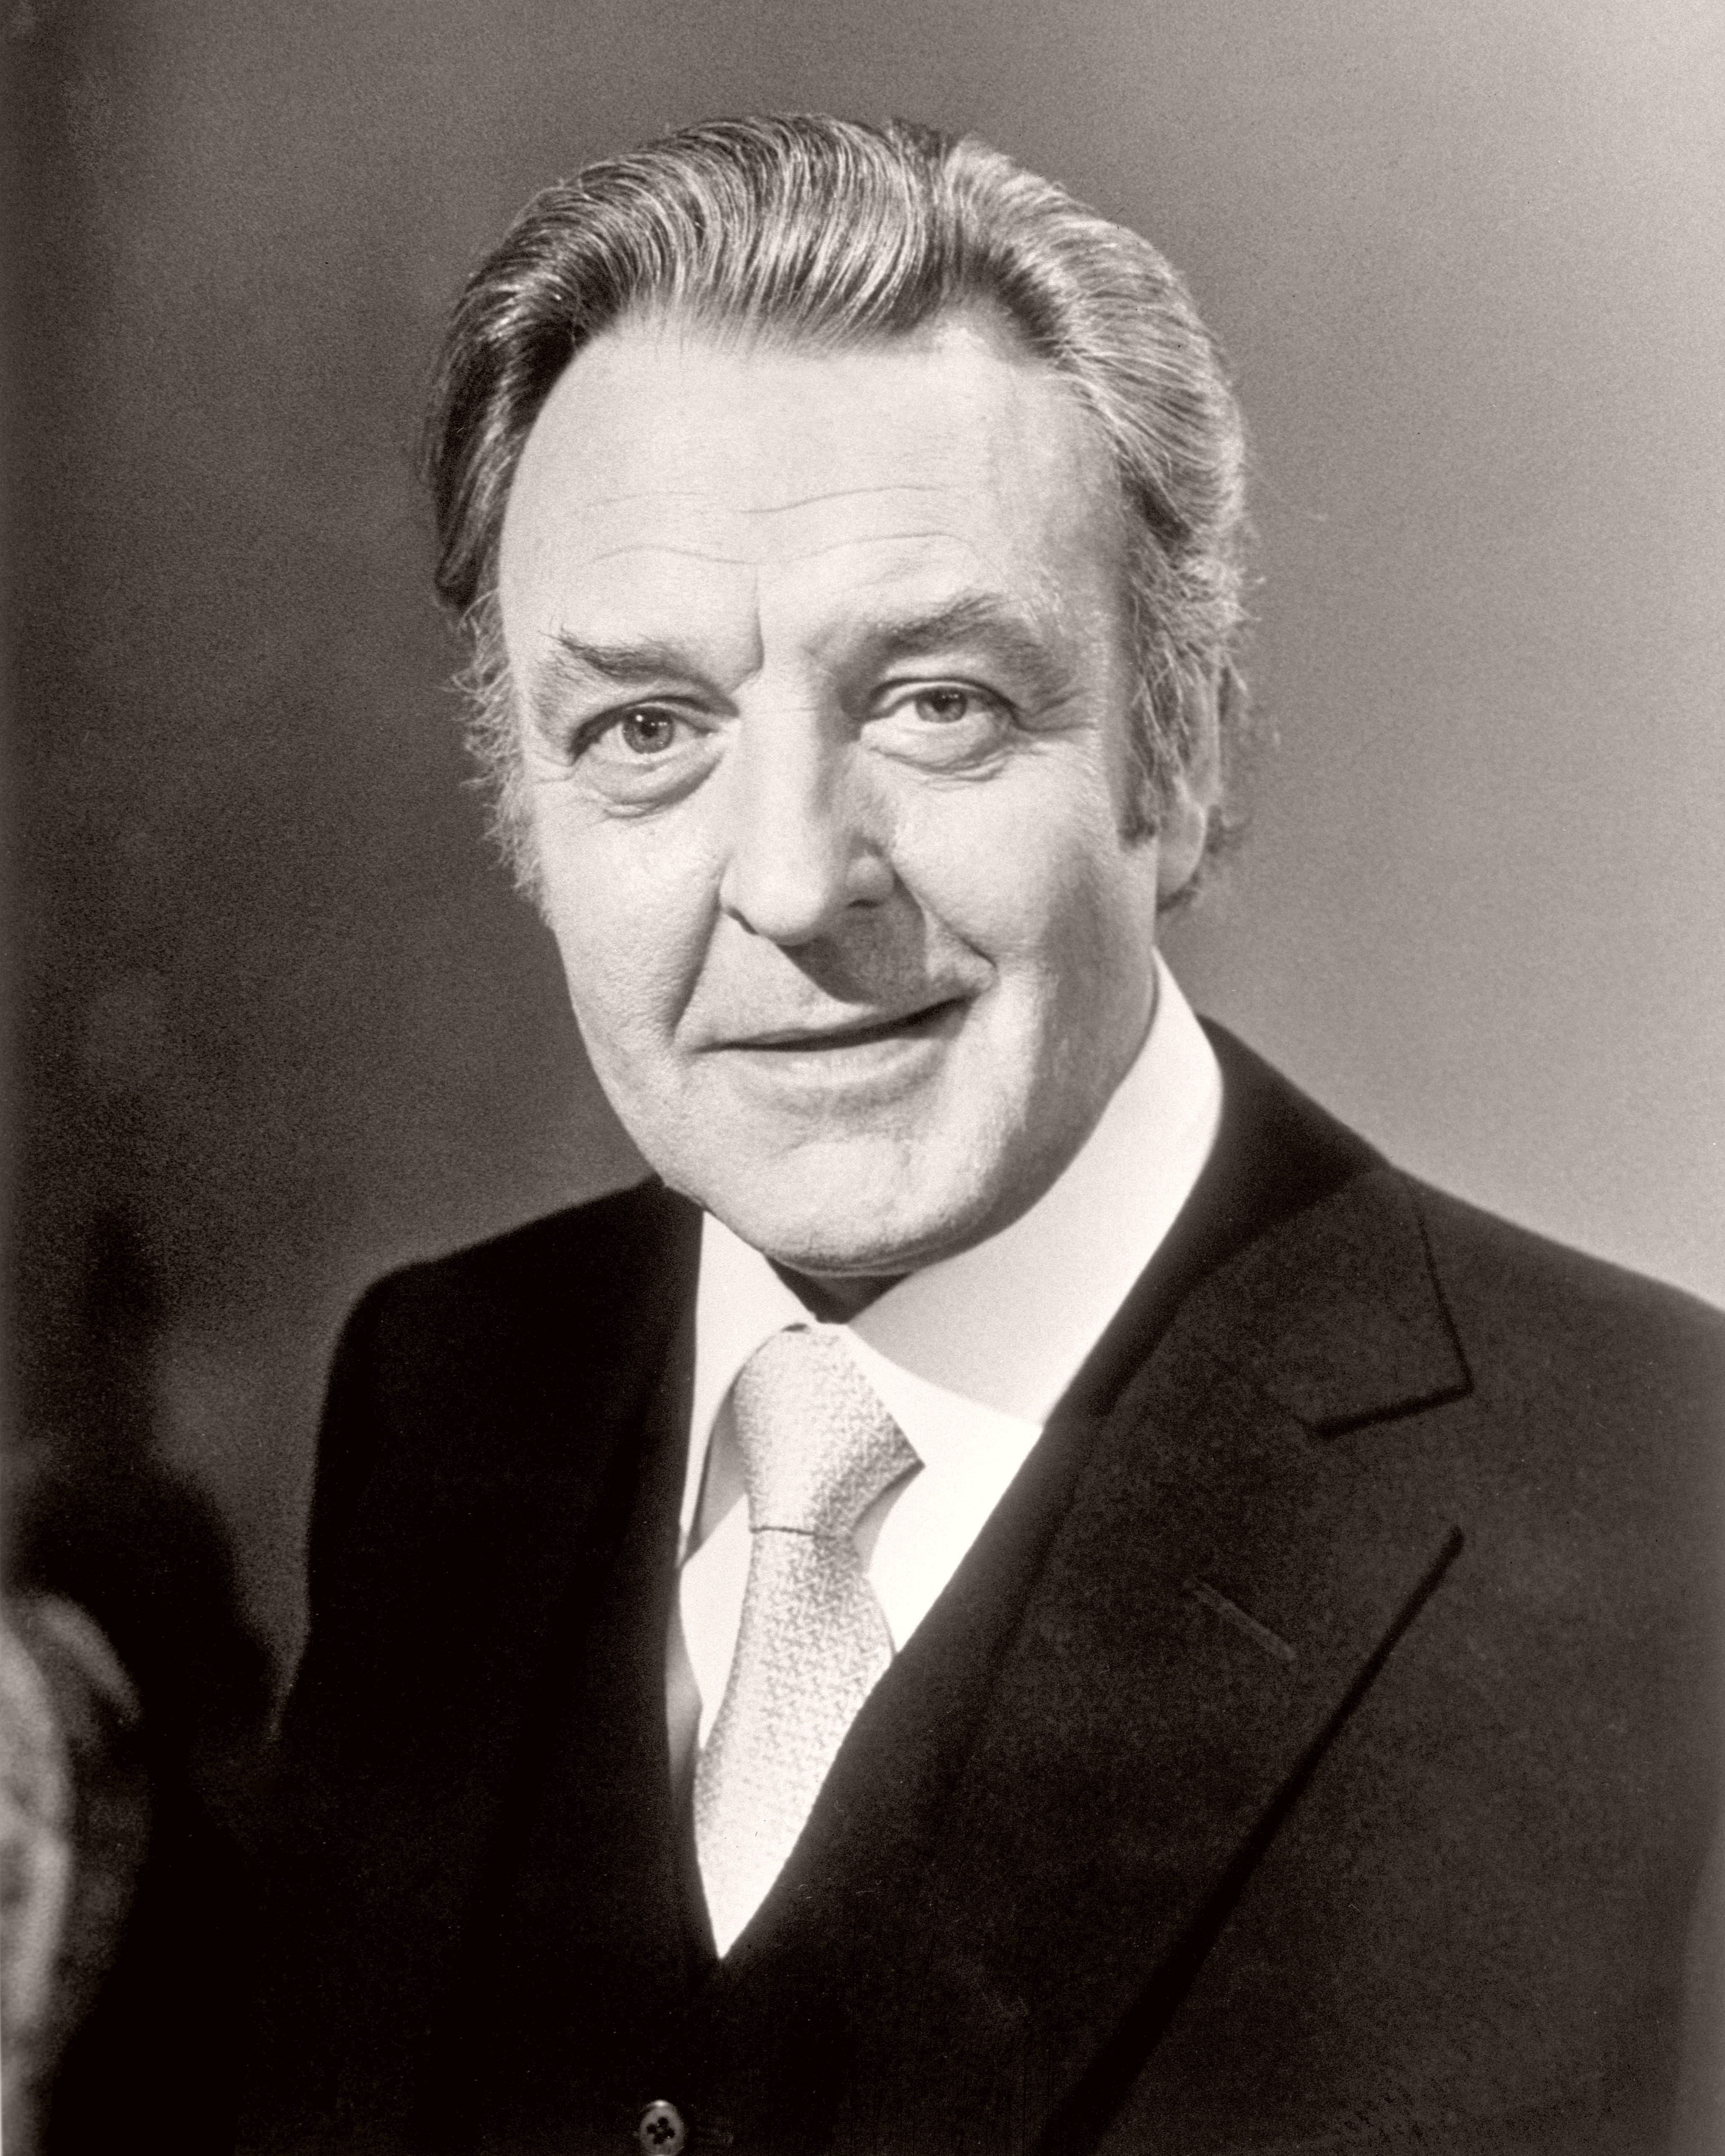 Photograph of British actor, Donald Sinden (1)